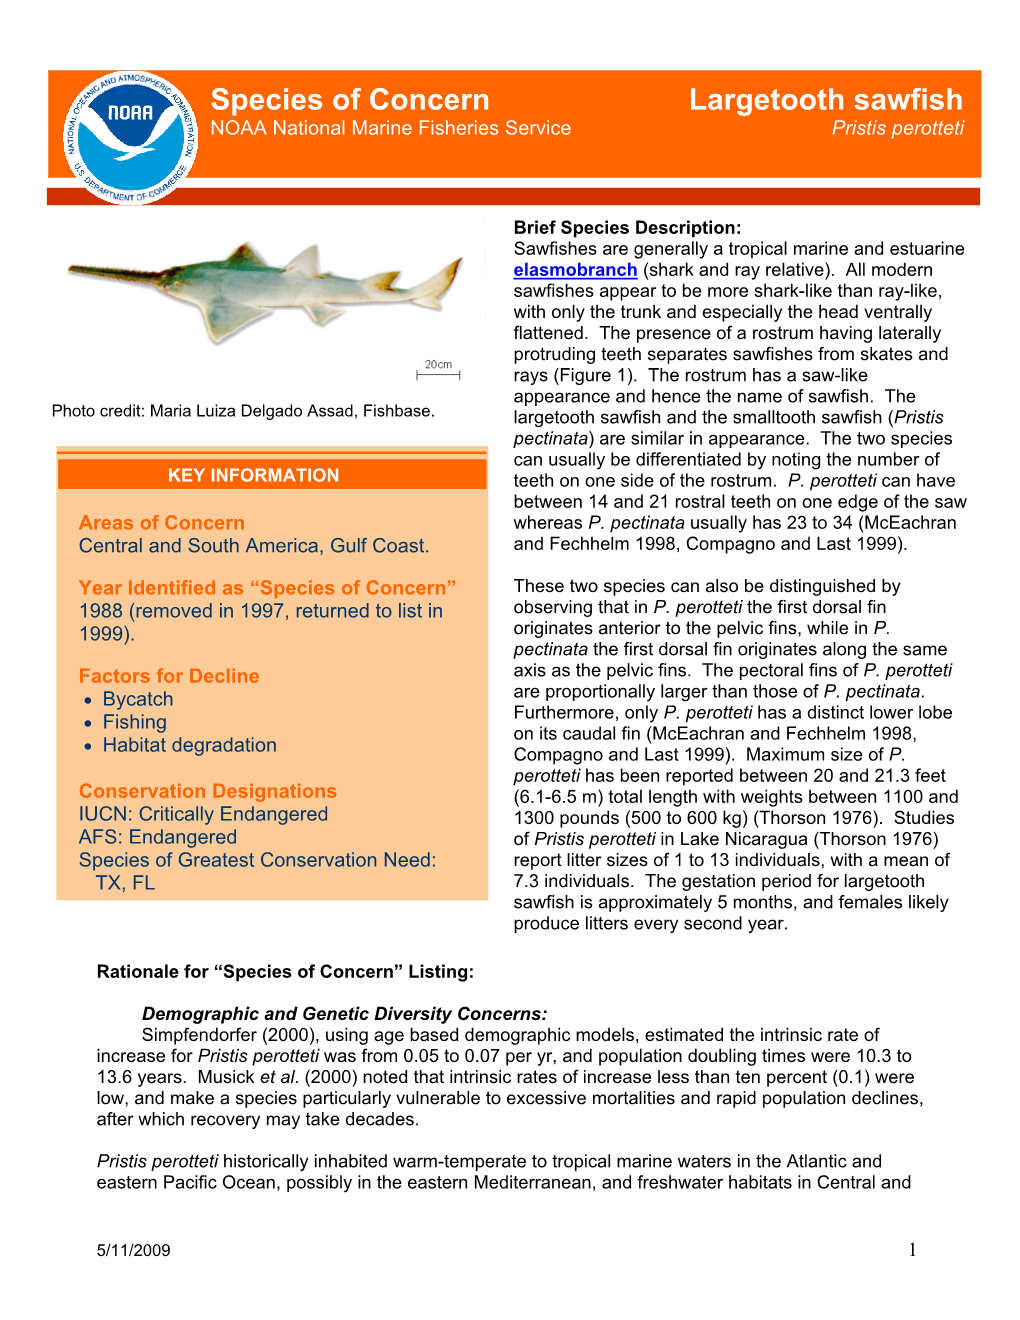 Largetooth Sawfish NOAA National Marine Fisheries Service Pristis Perotteti